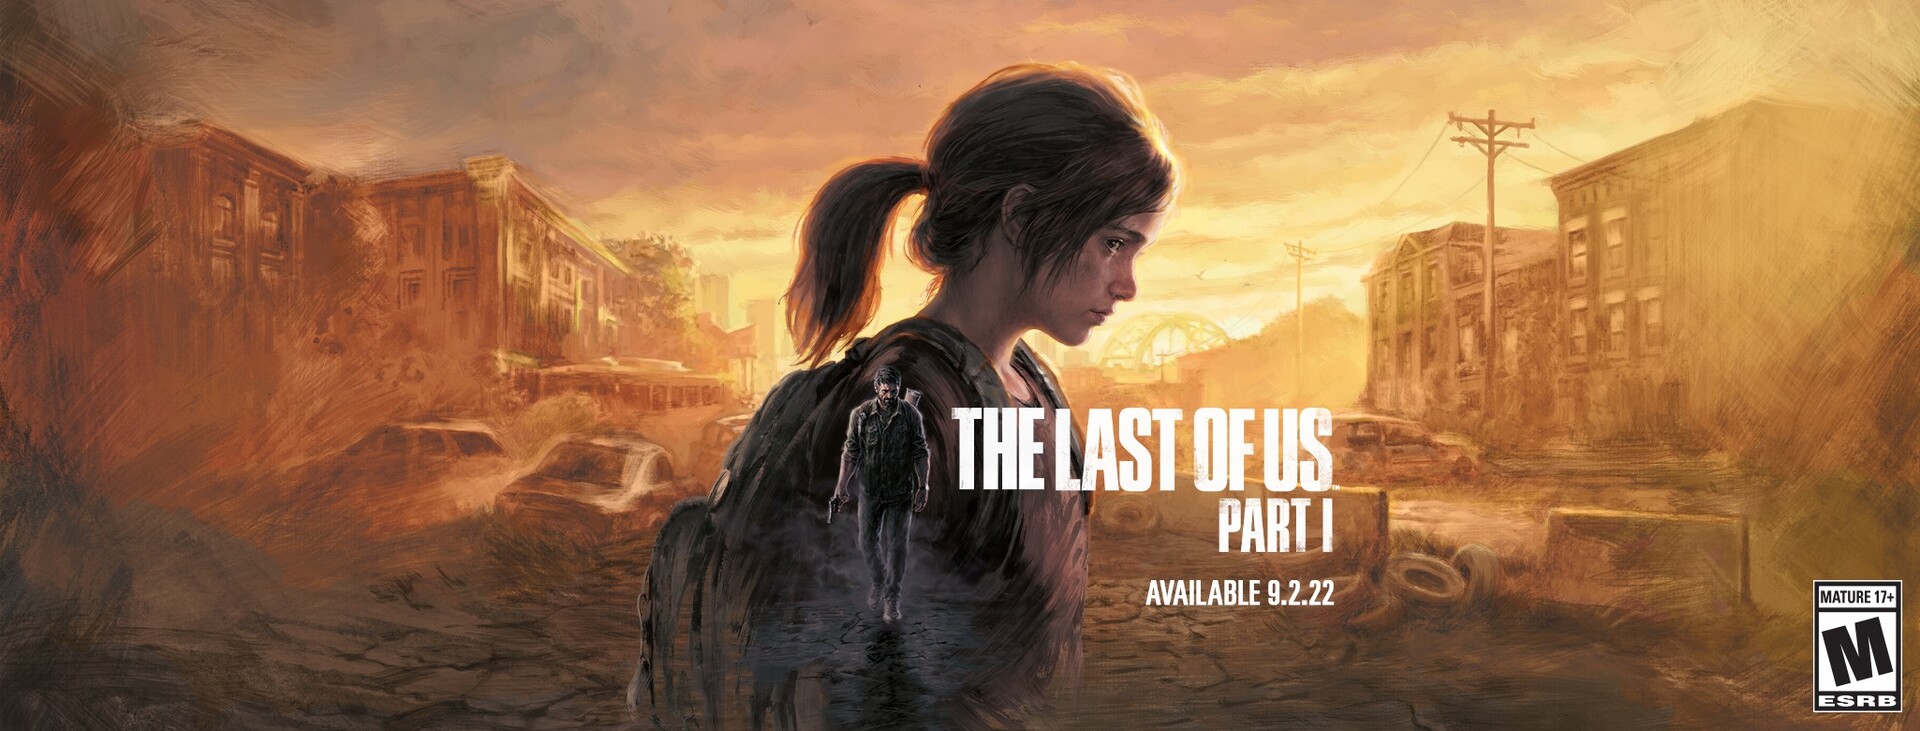 ArtStation - The Last of Us Part I